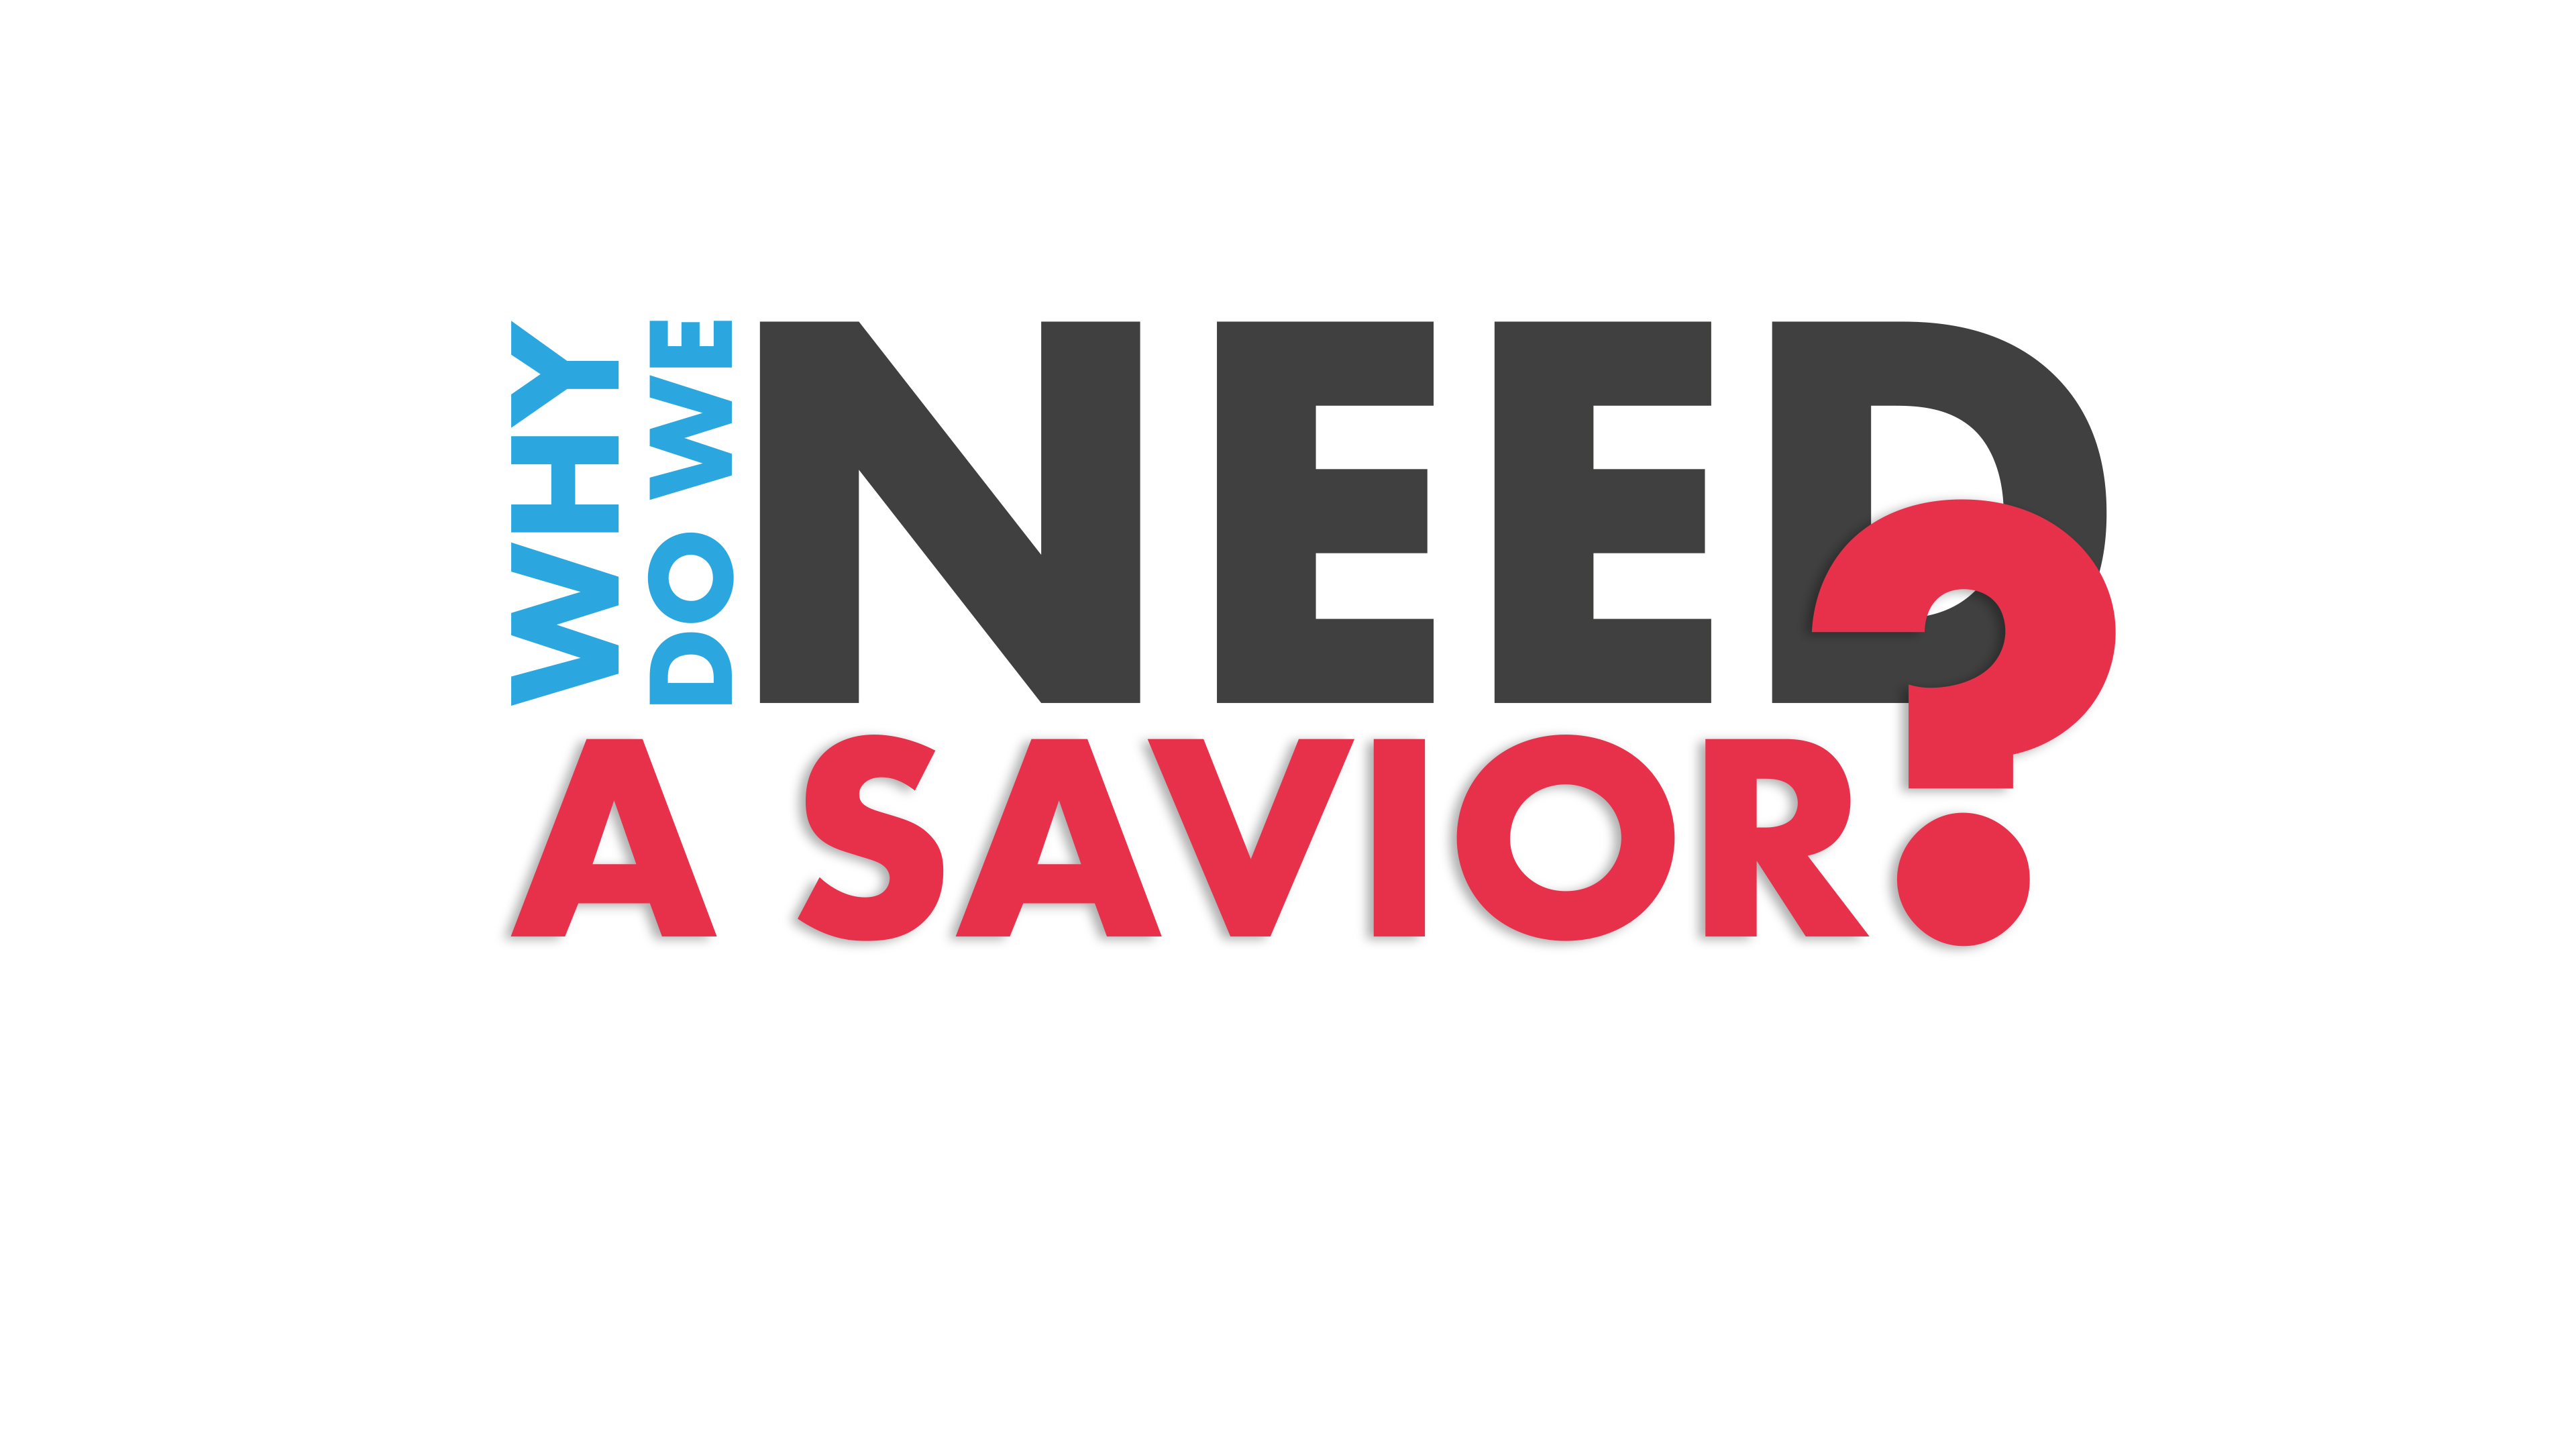 Why do we need a Savior?